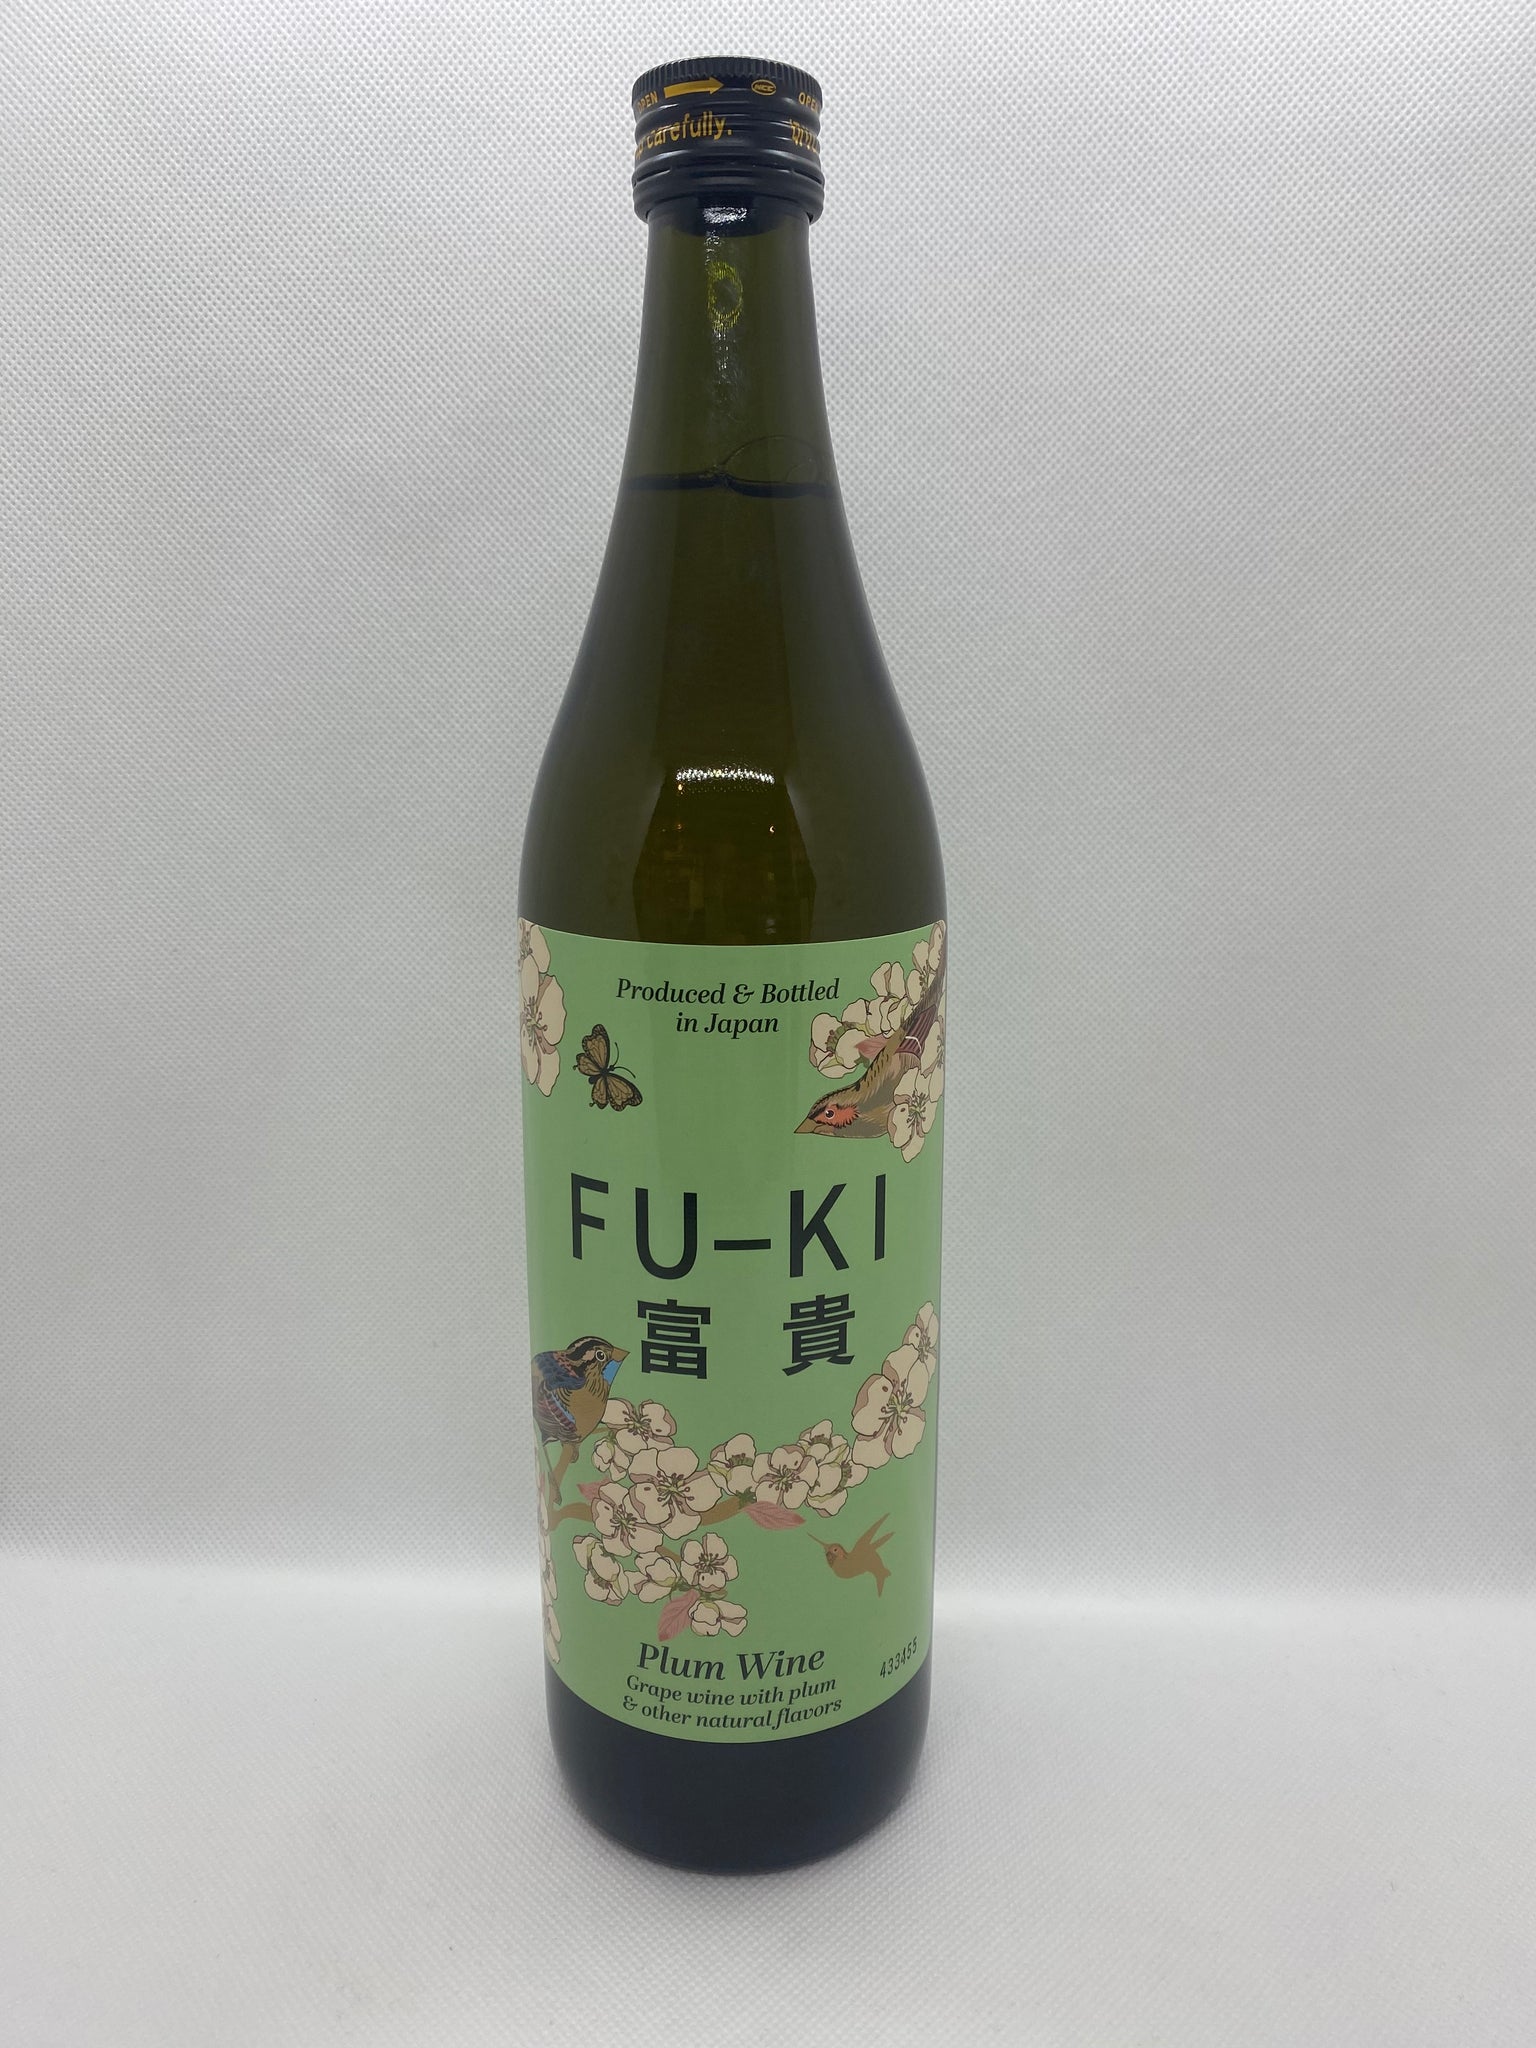 FU-KI 9% - Plum wine